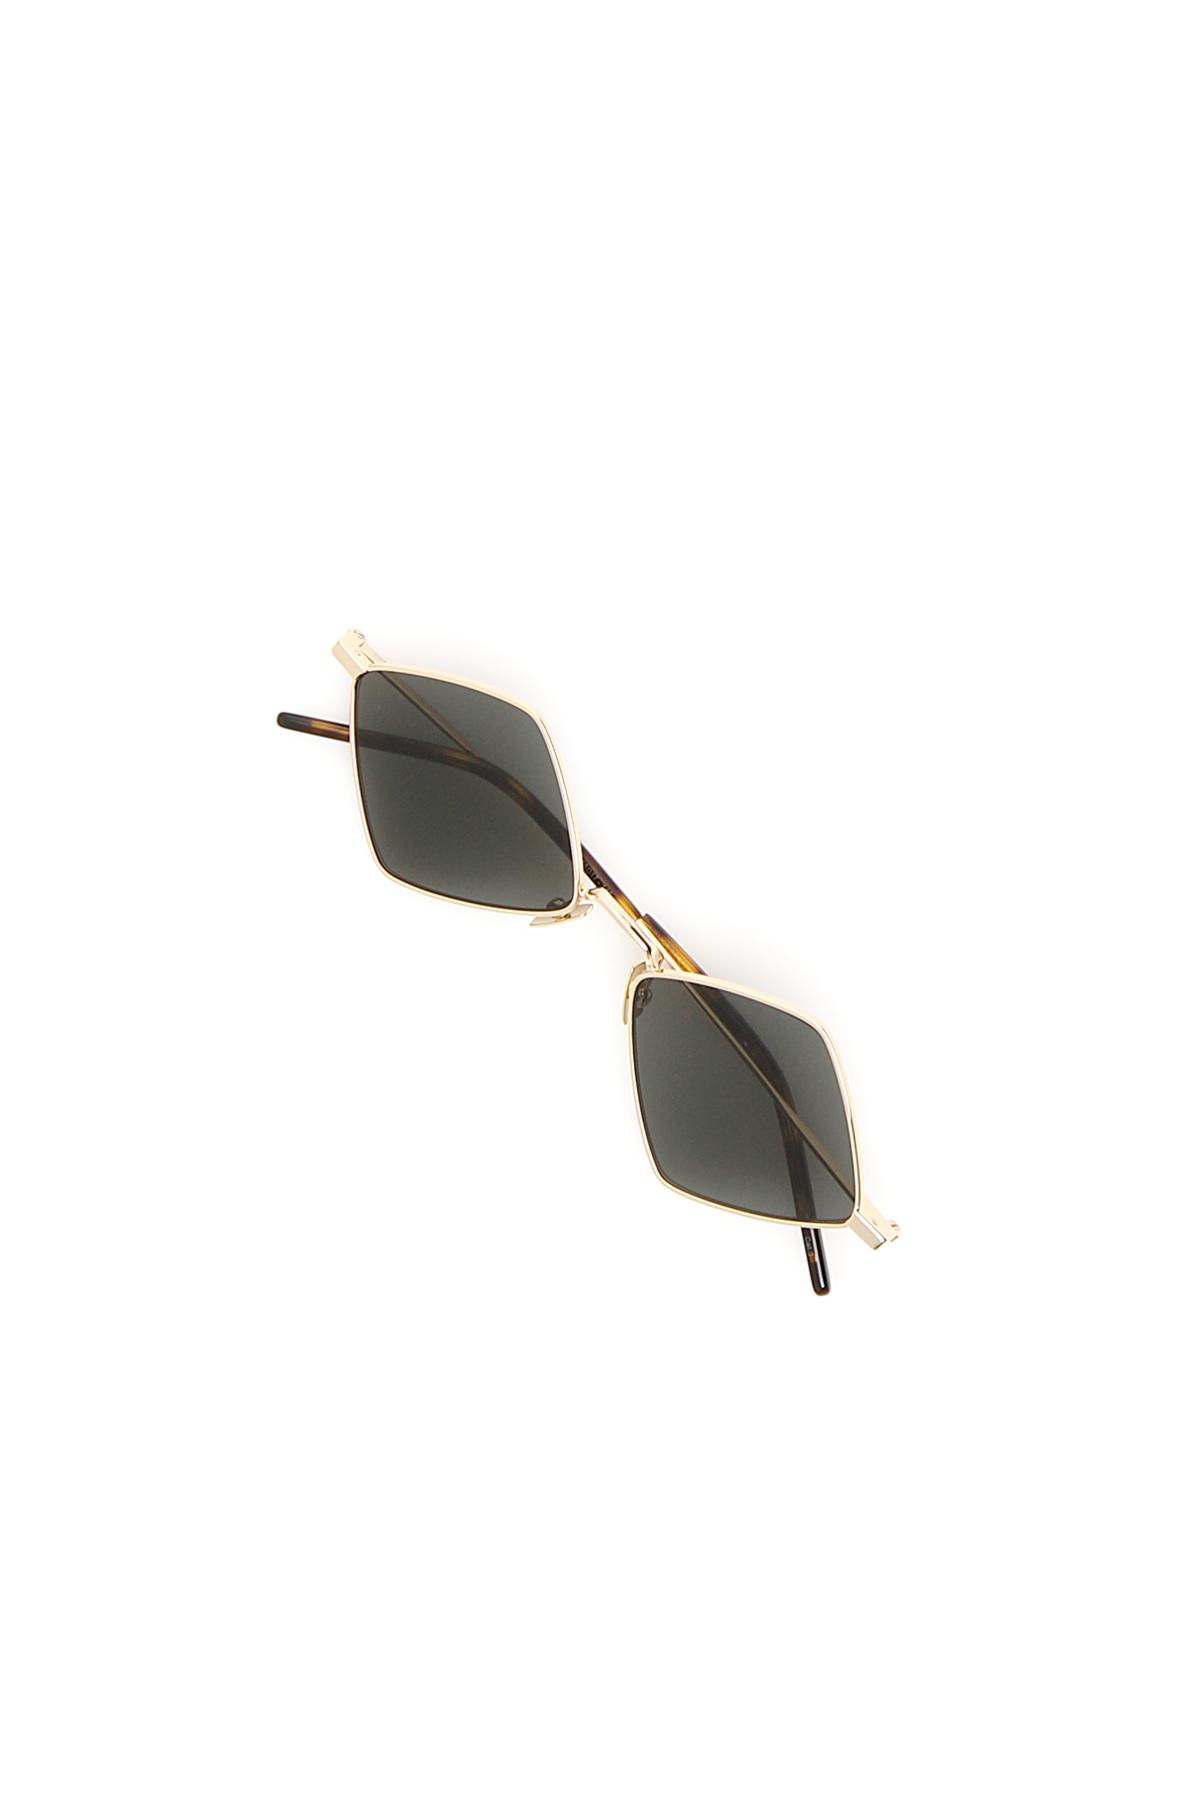 SL 302 Lisa Diamond Shaped Sunglasses in Brown - Saint Laurent